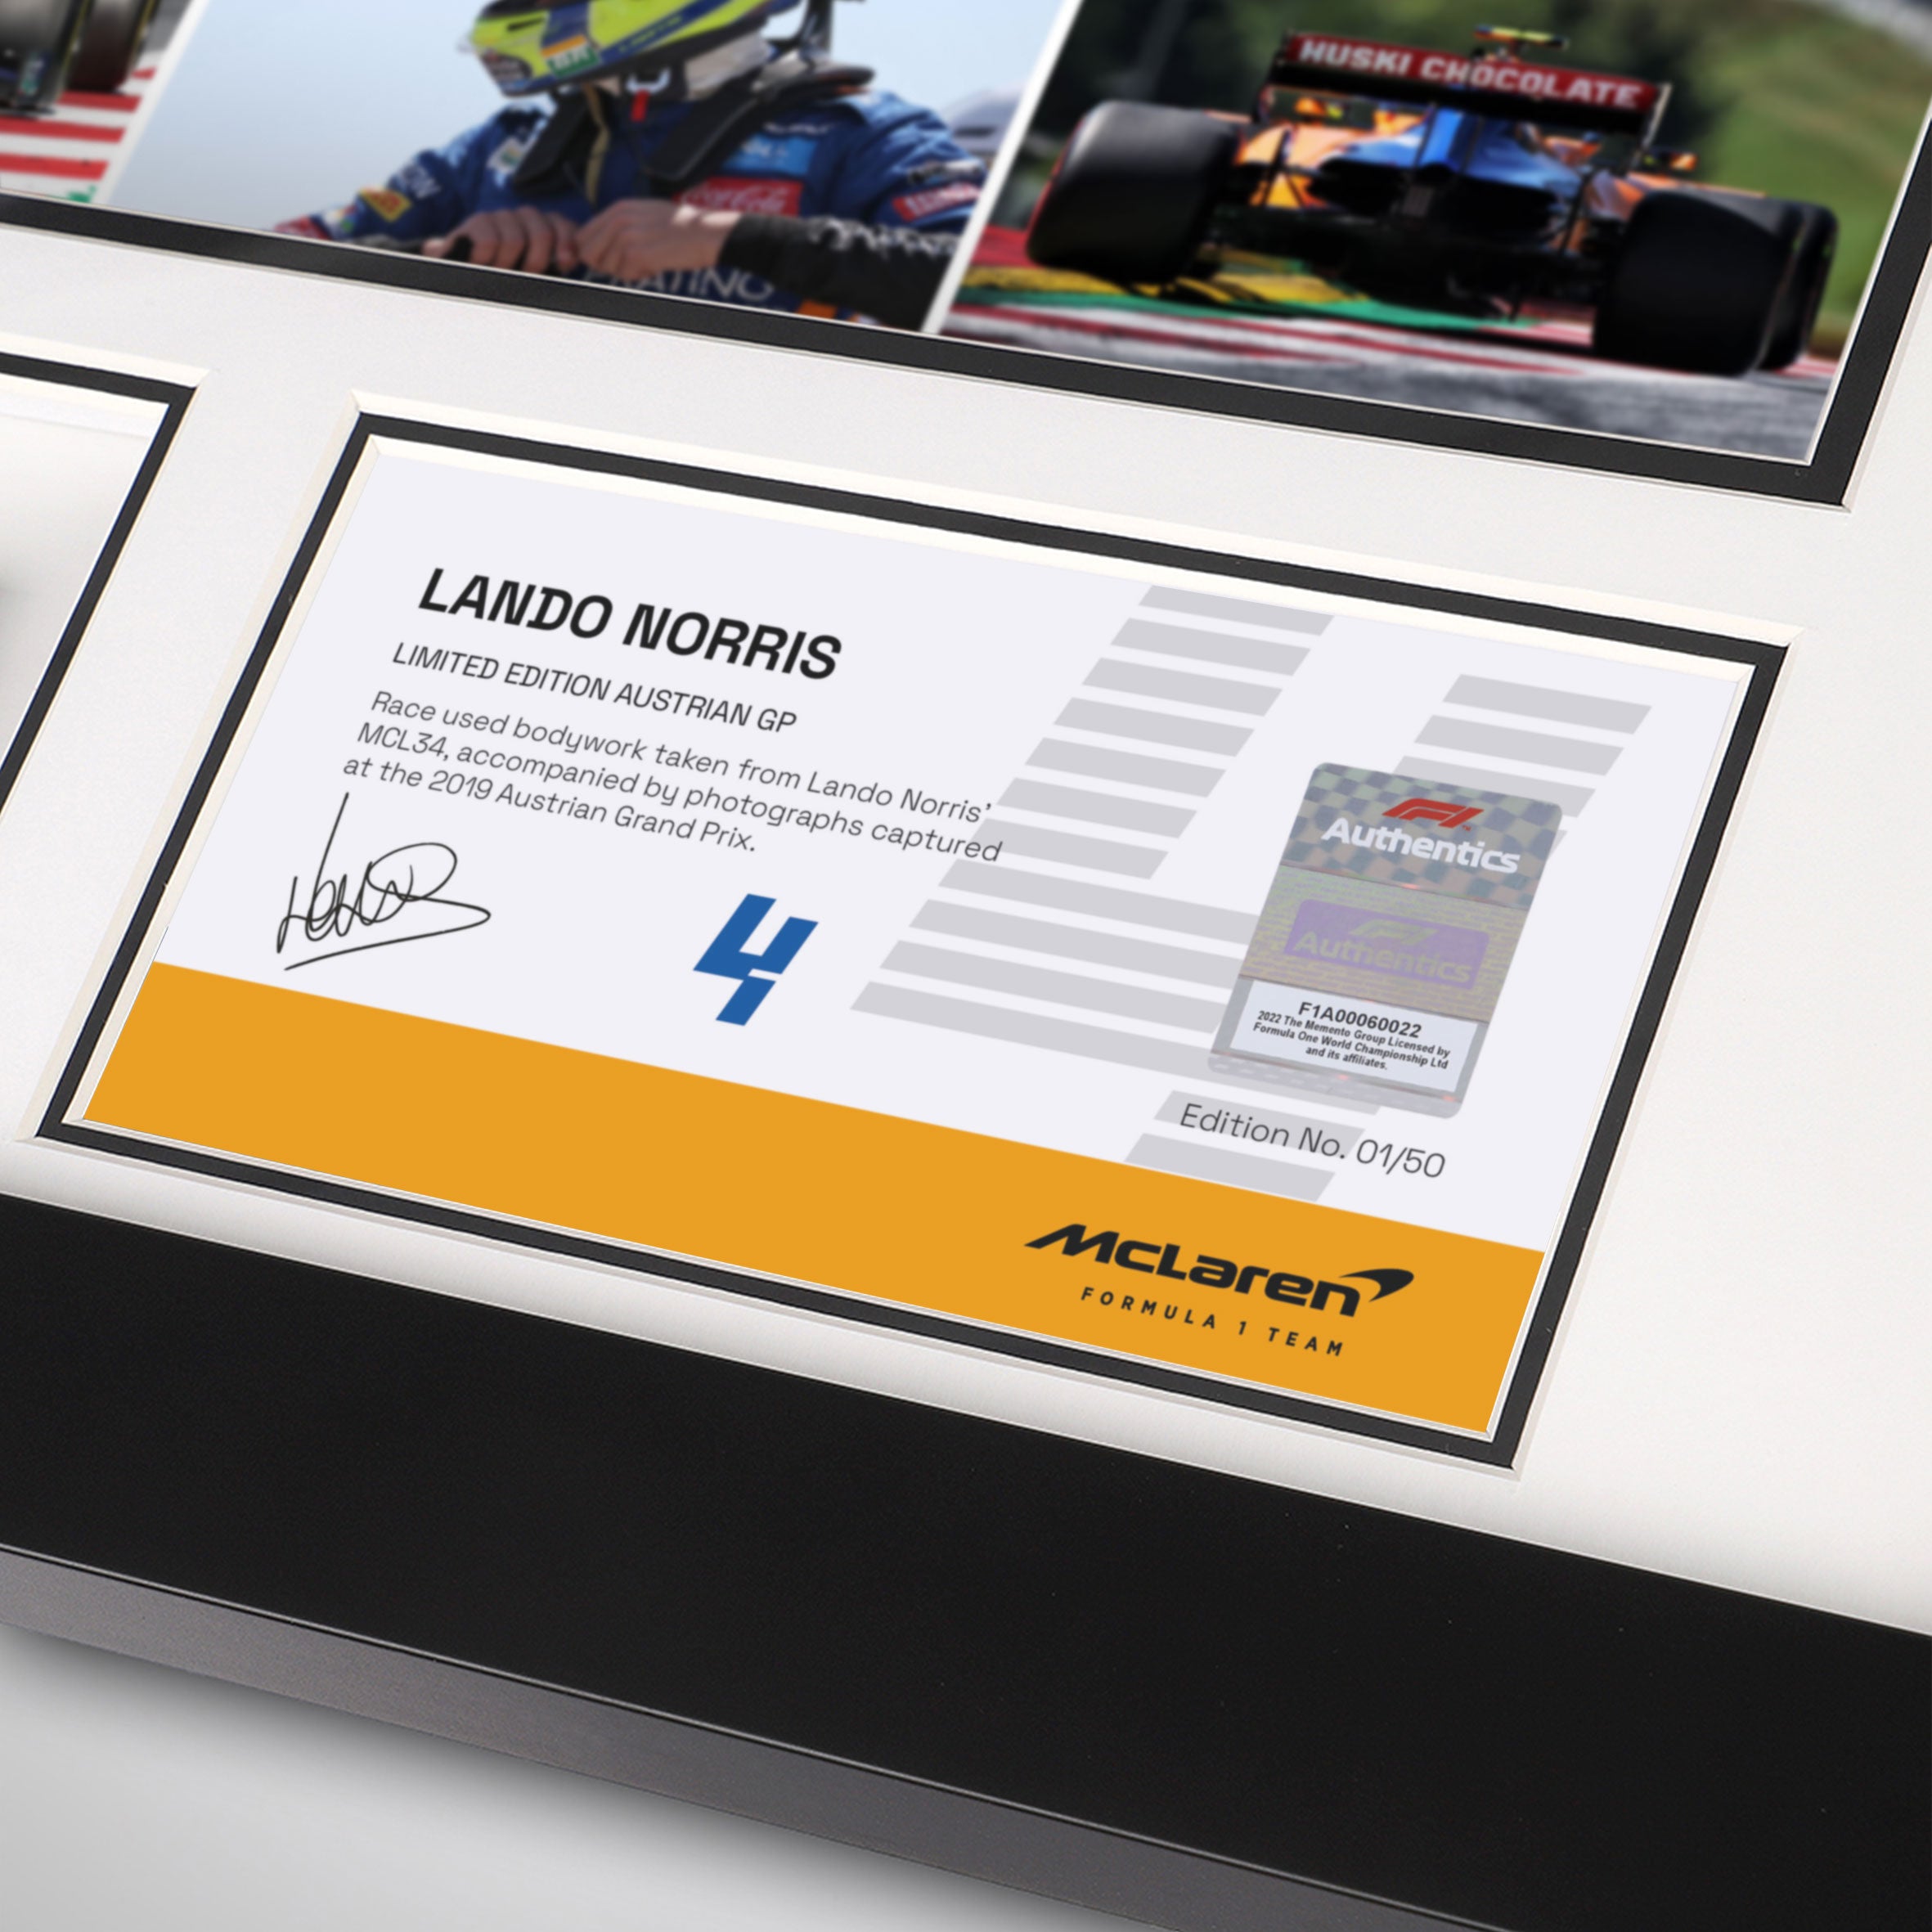 Limited-Edition Lando Norris 2019 Bodywork & Photos – Austrian GP